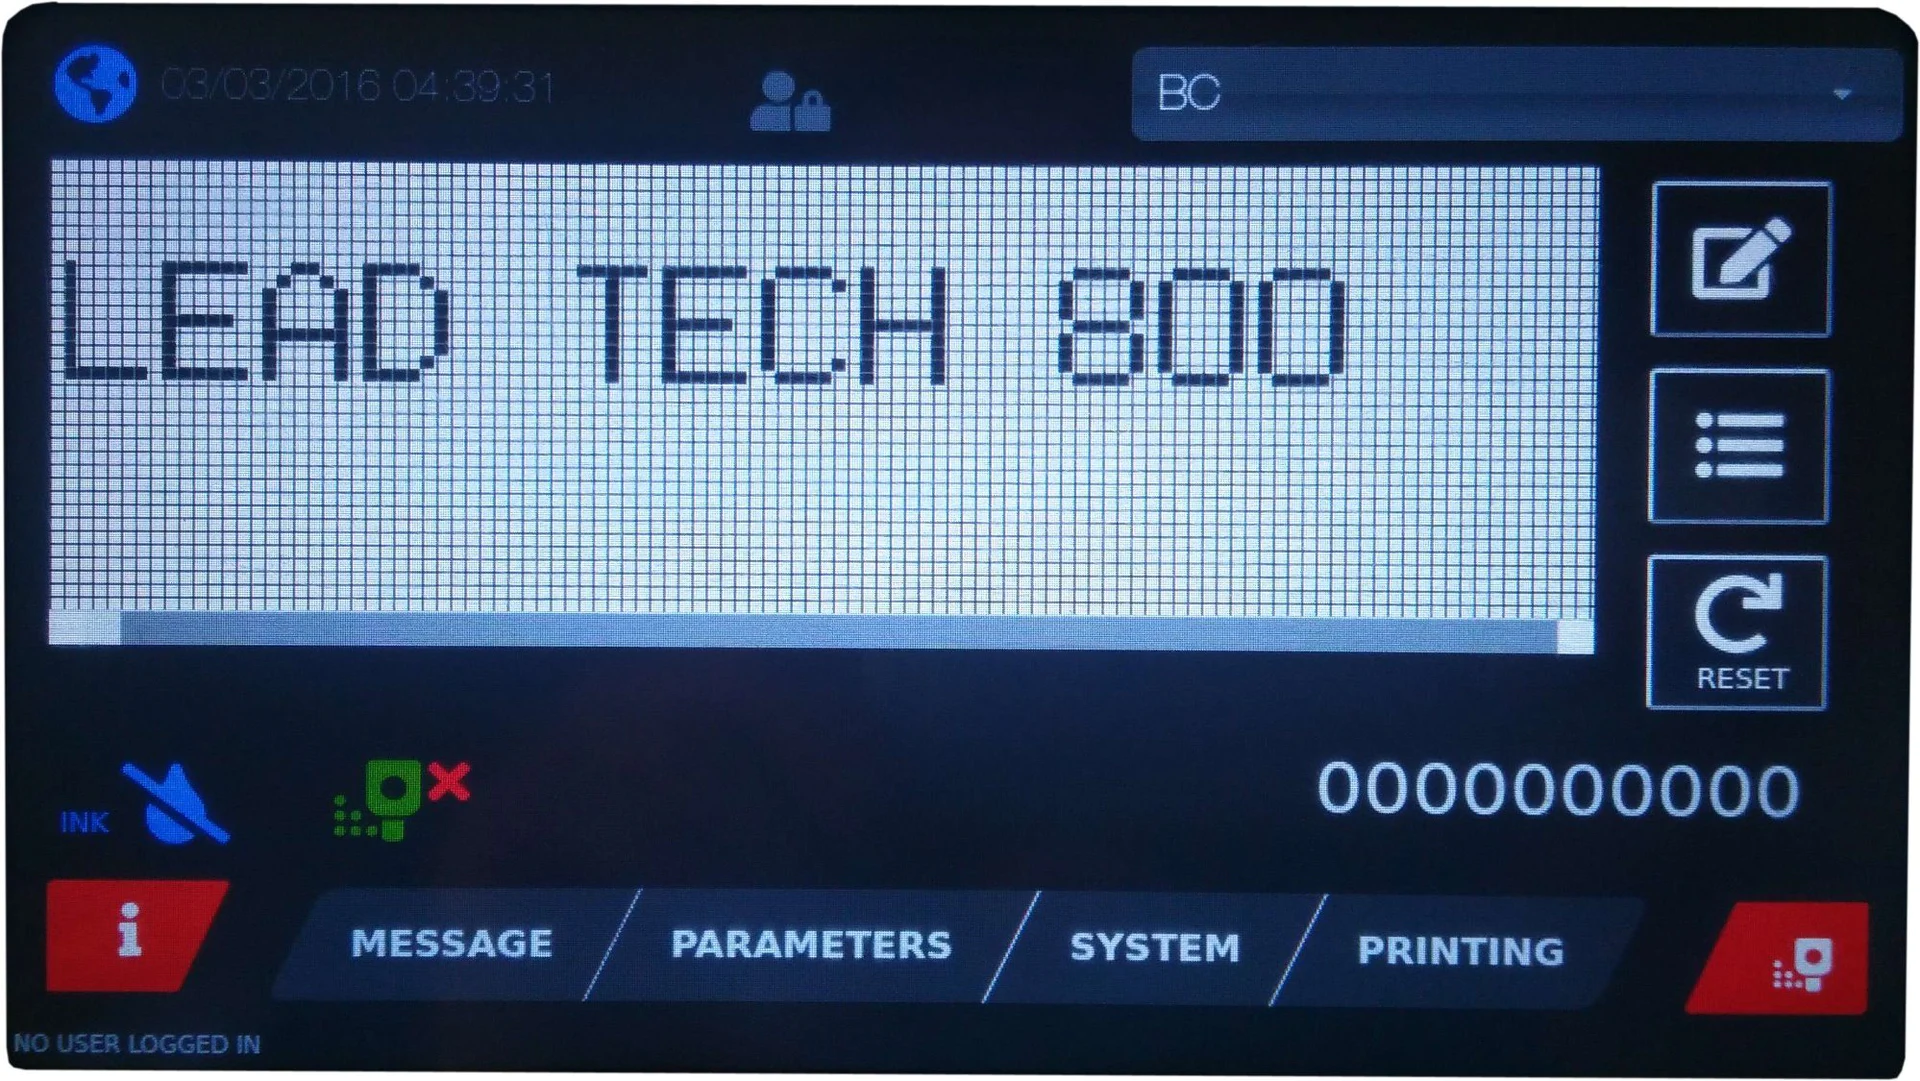 Lead Tech Lt800 Industrial Continuous Cij Inkjet Printer